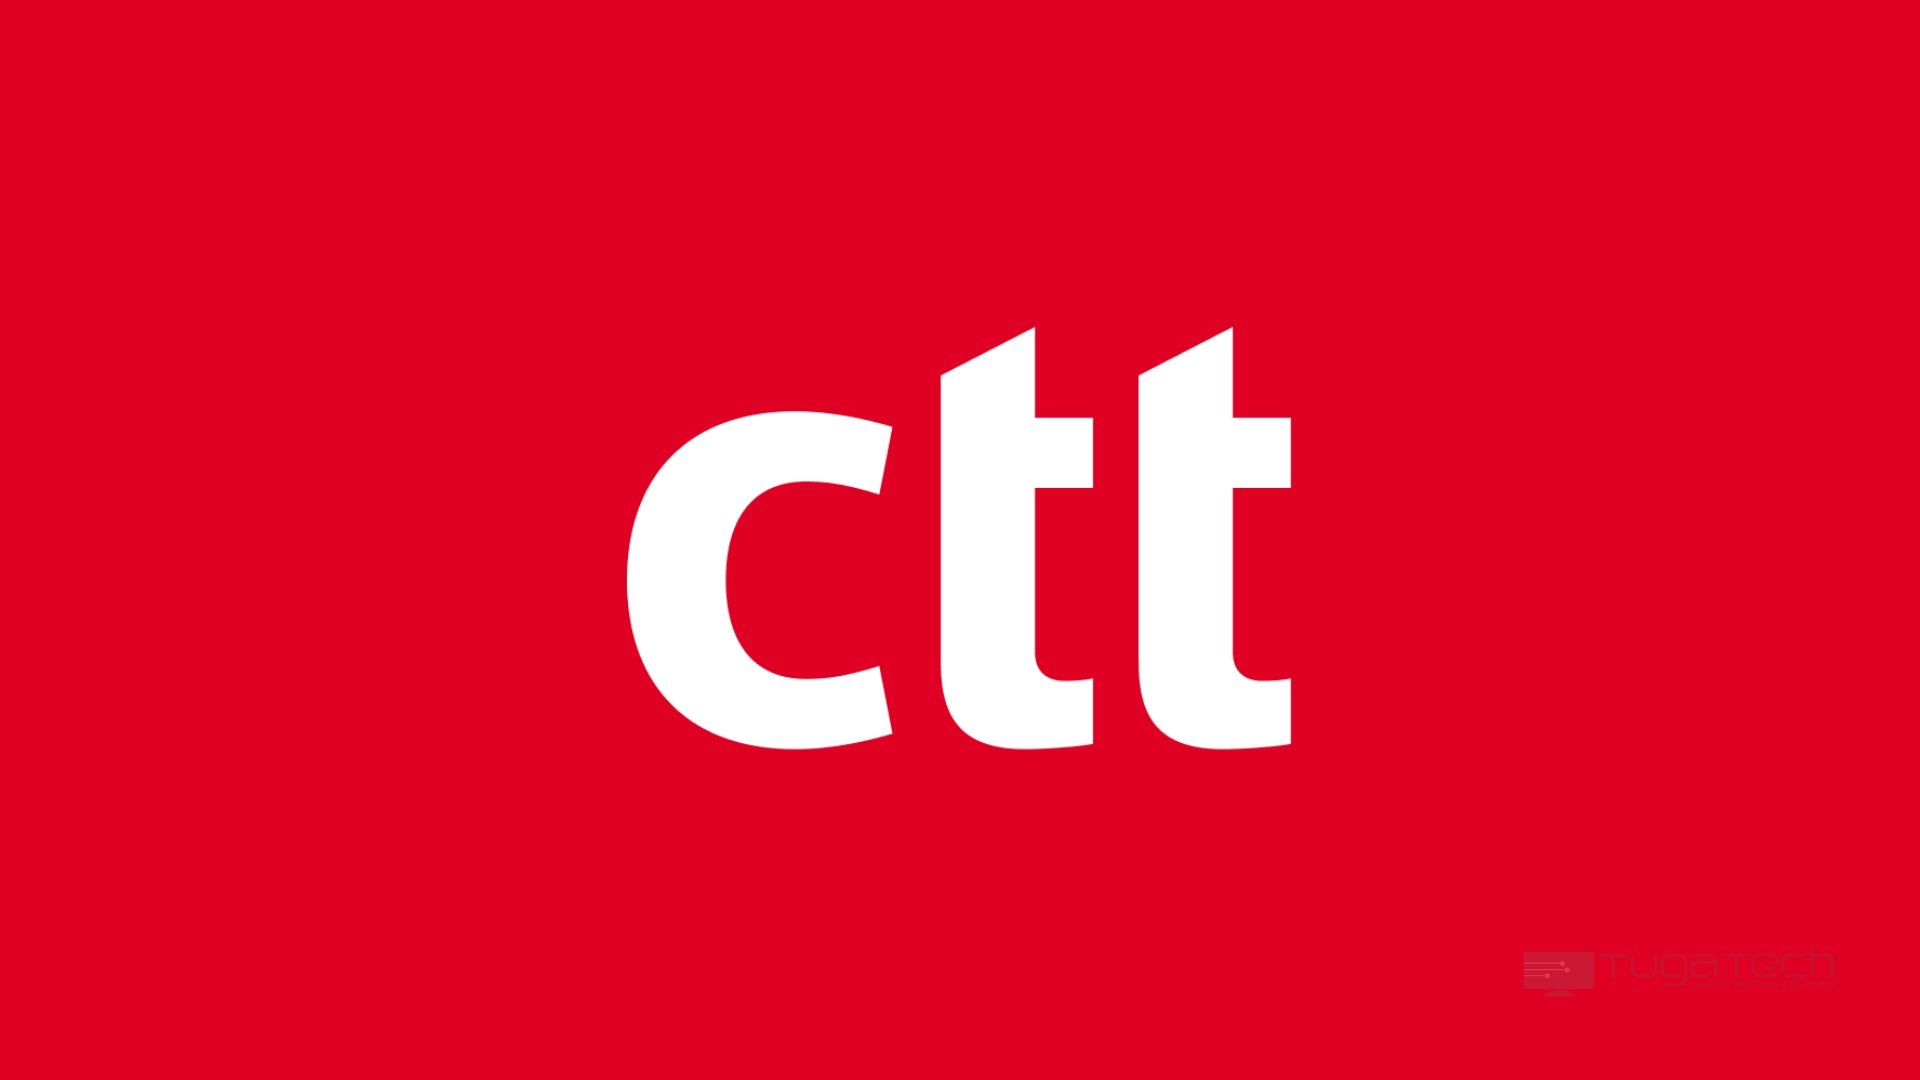 logo dos ctt